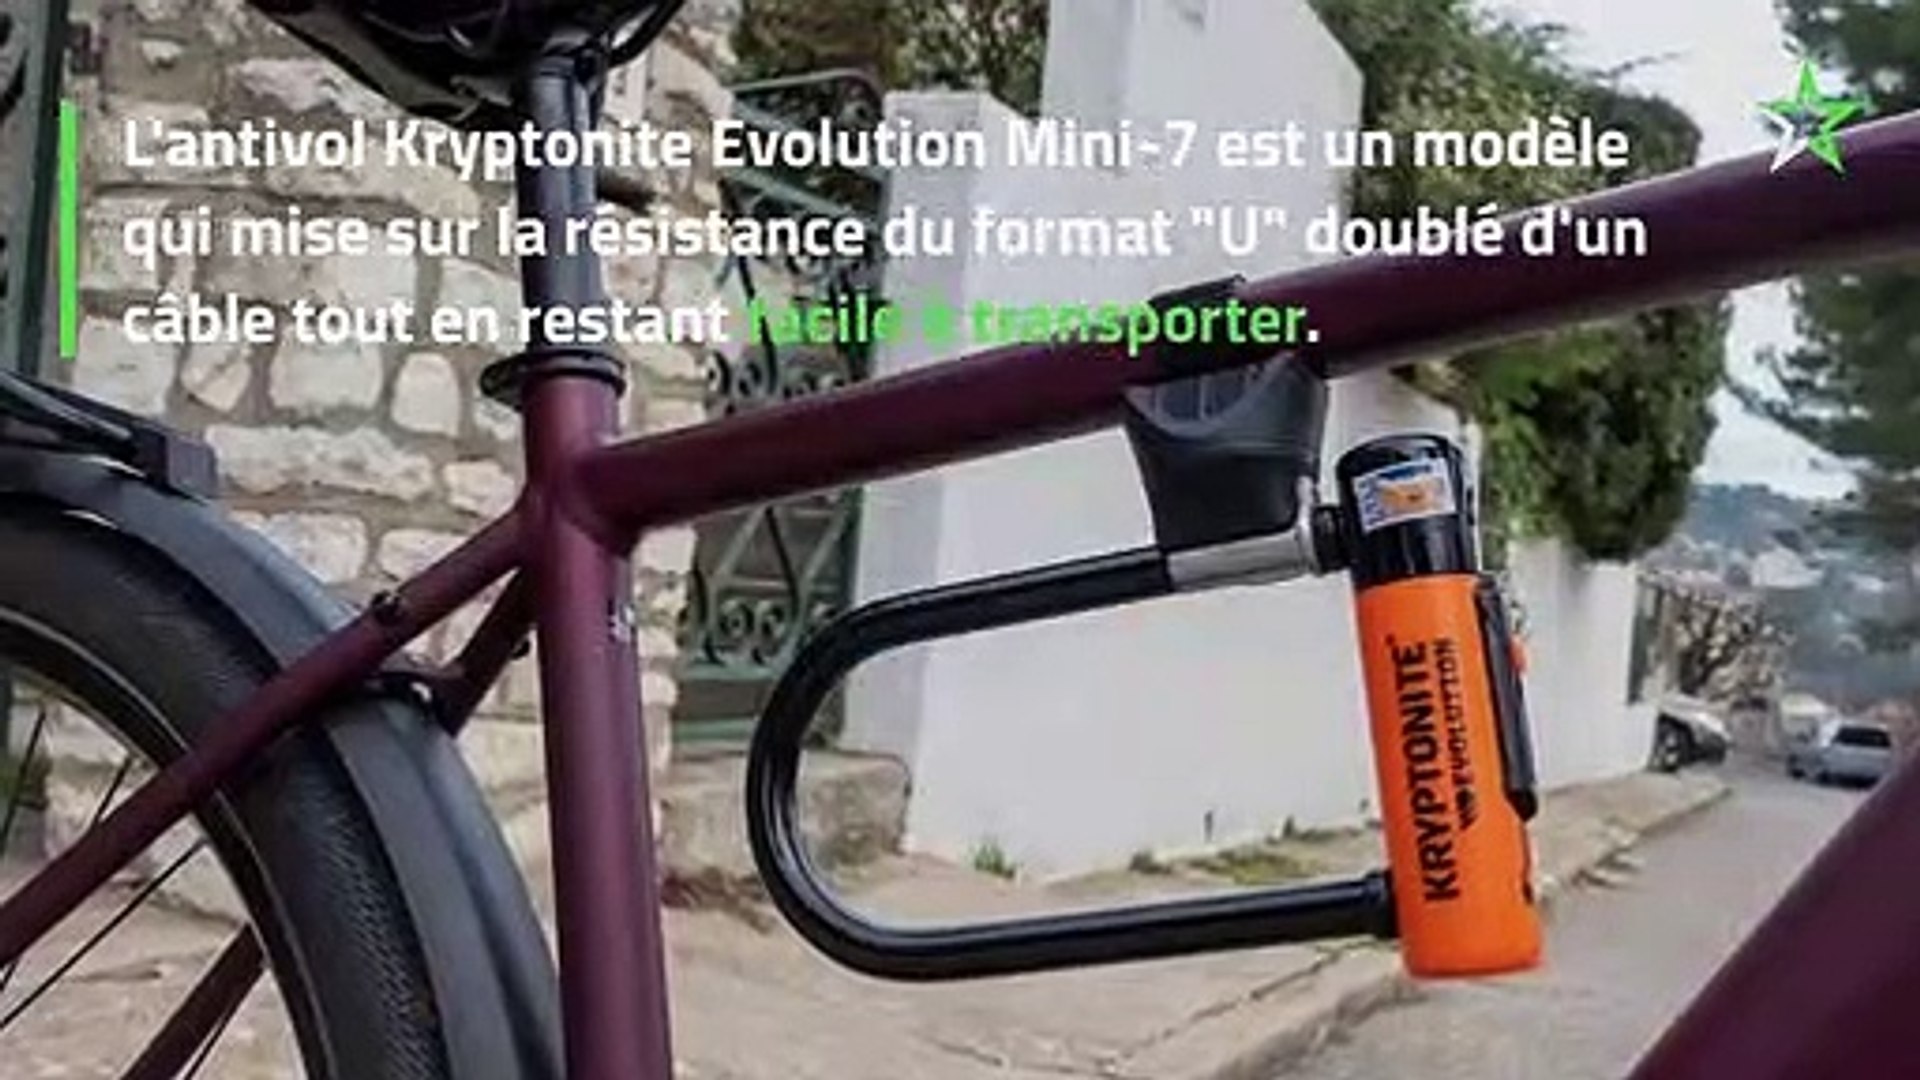 Kryptonite Evolution Mini 7 Antivol en U pour vélo et câble